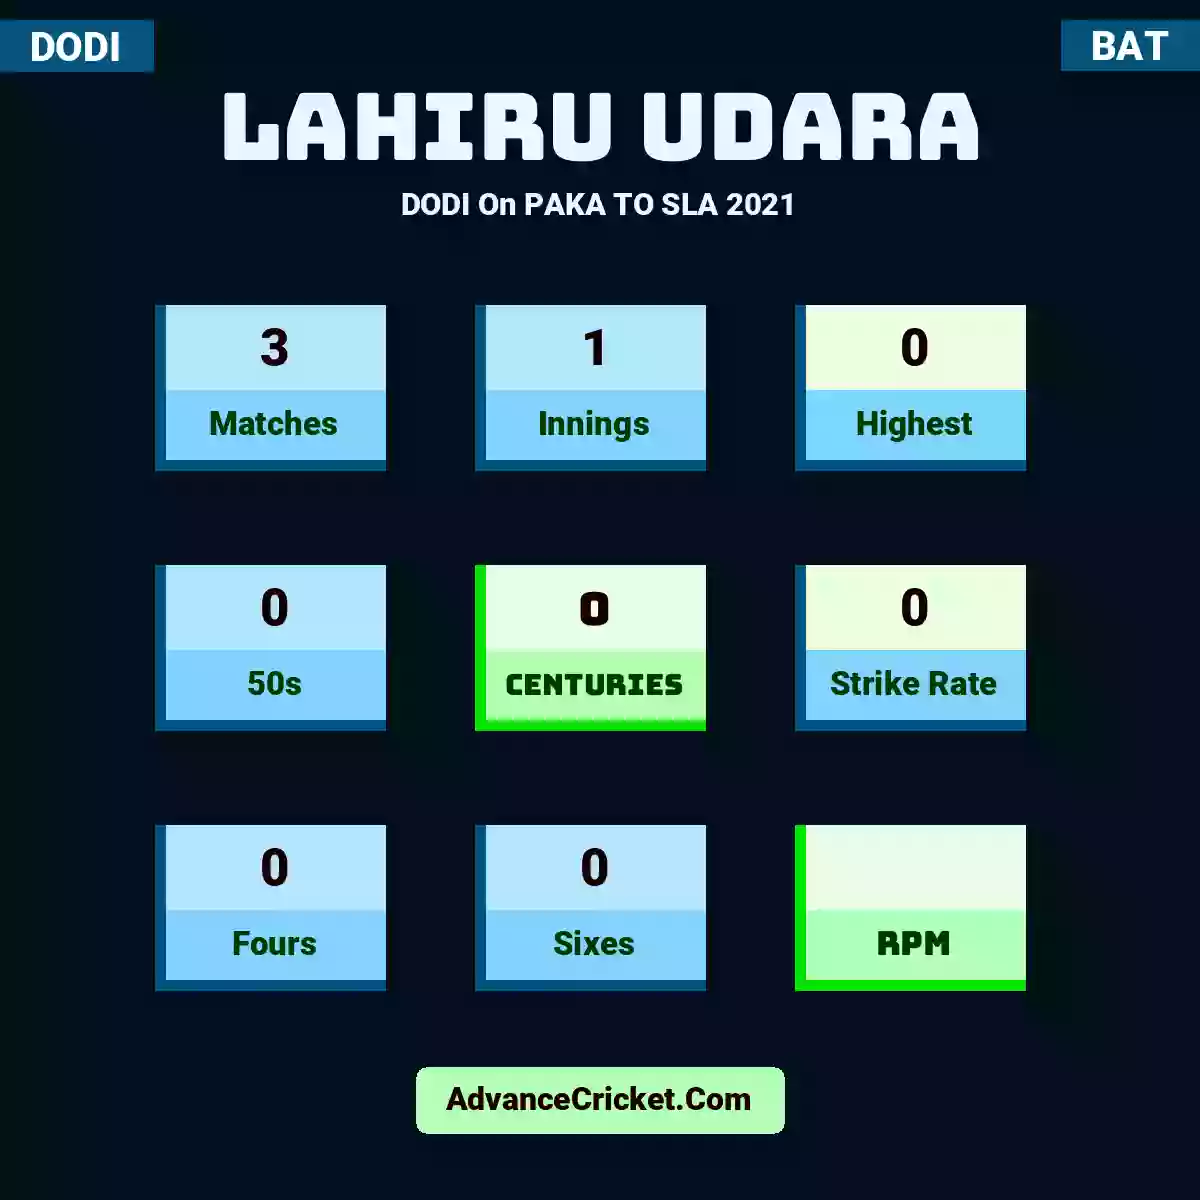 Lahiru Udara DODI  On PAKA TO SLA 2021, Lahiru Udara played 3 matches, scored 0 runs as highest, 0 half-centuries, and 0 centuries, with a strike rate of 0. L.Udara hit 0 fours and 0 sixes.